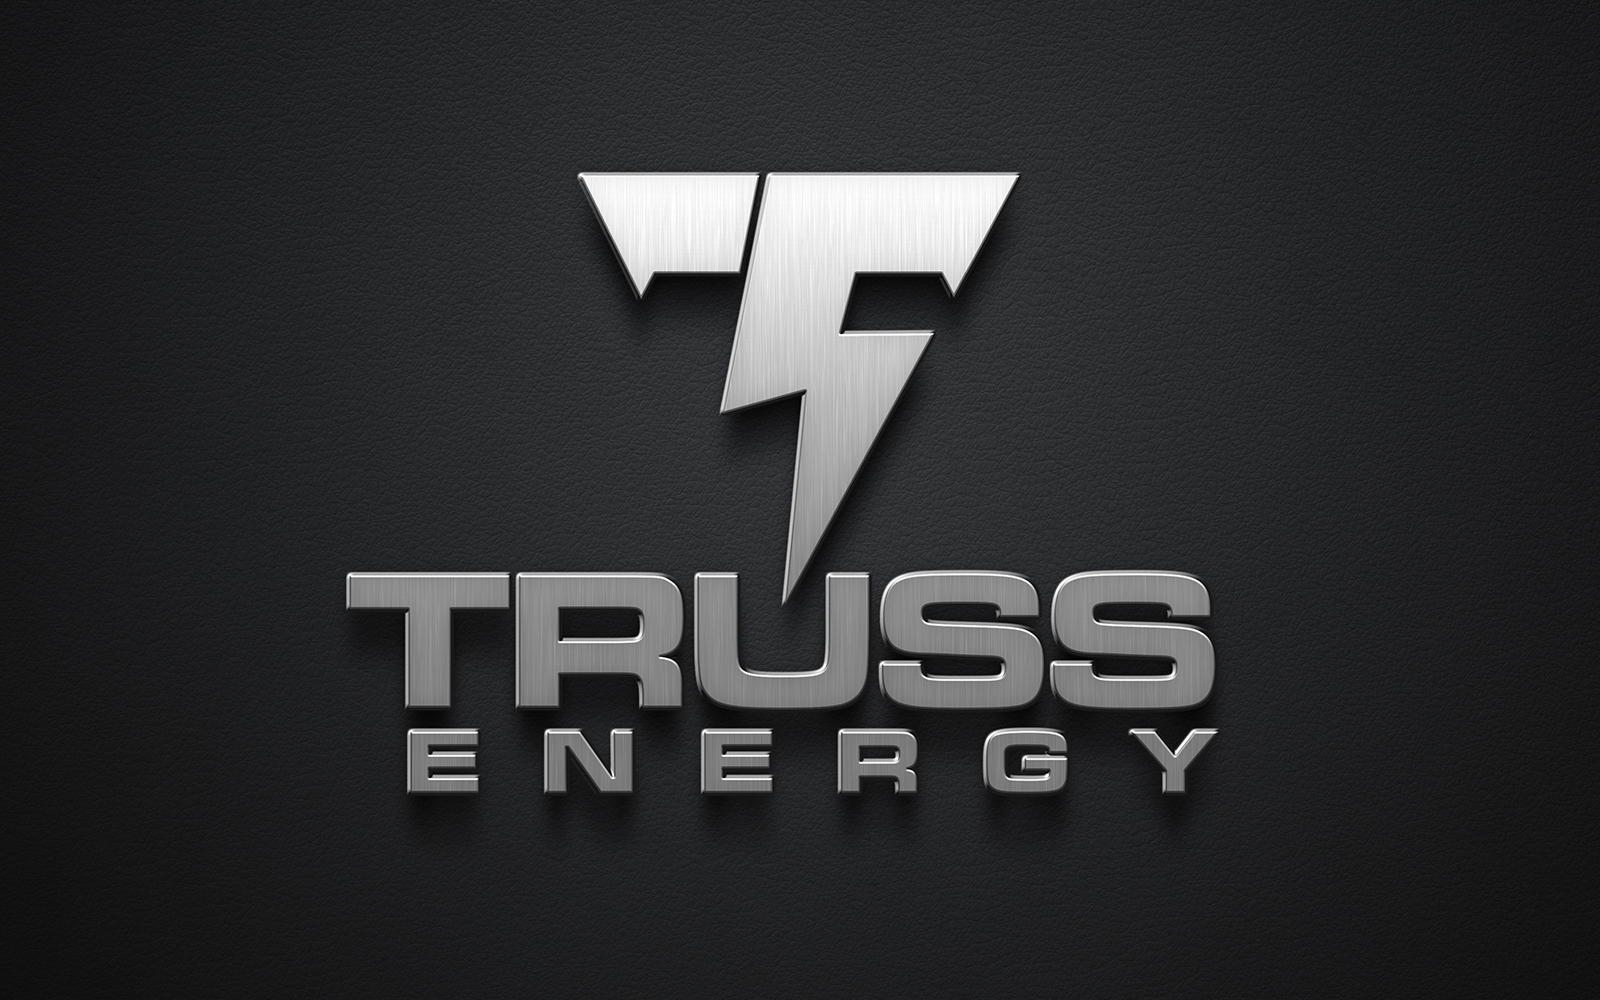 Energy T premium logo template